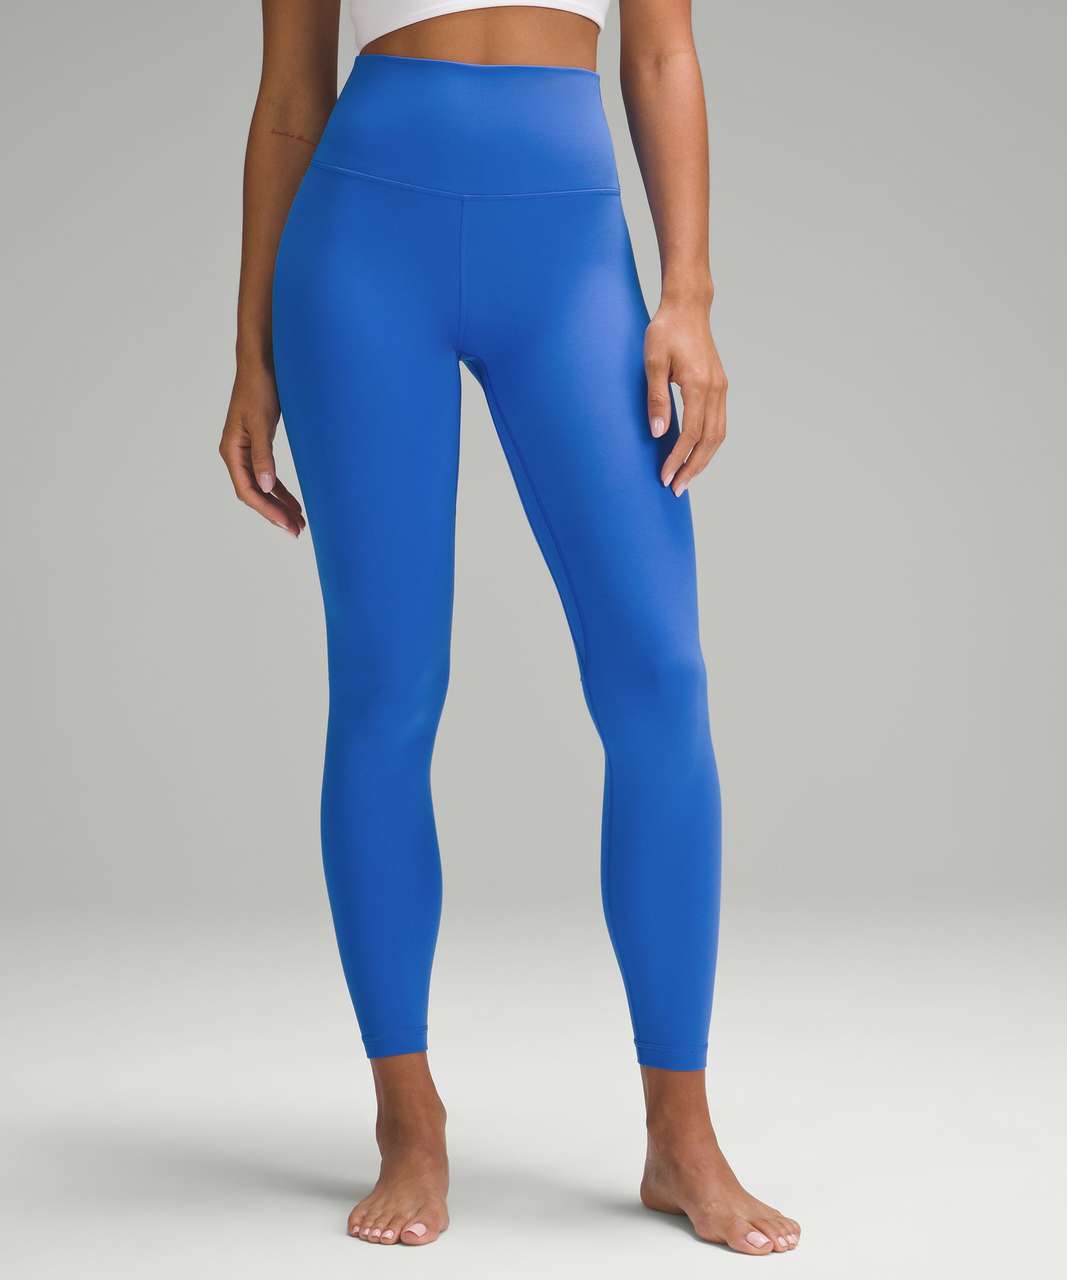 Lululemon Align Bodysuit Blue Size 6 - $95 (25% Off Retail) - From Brooke